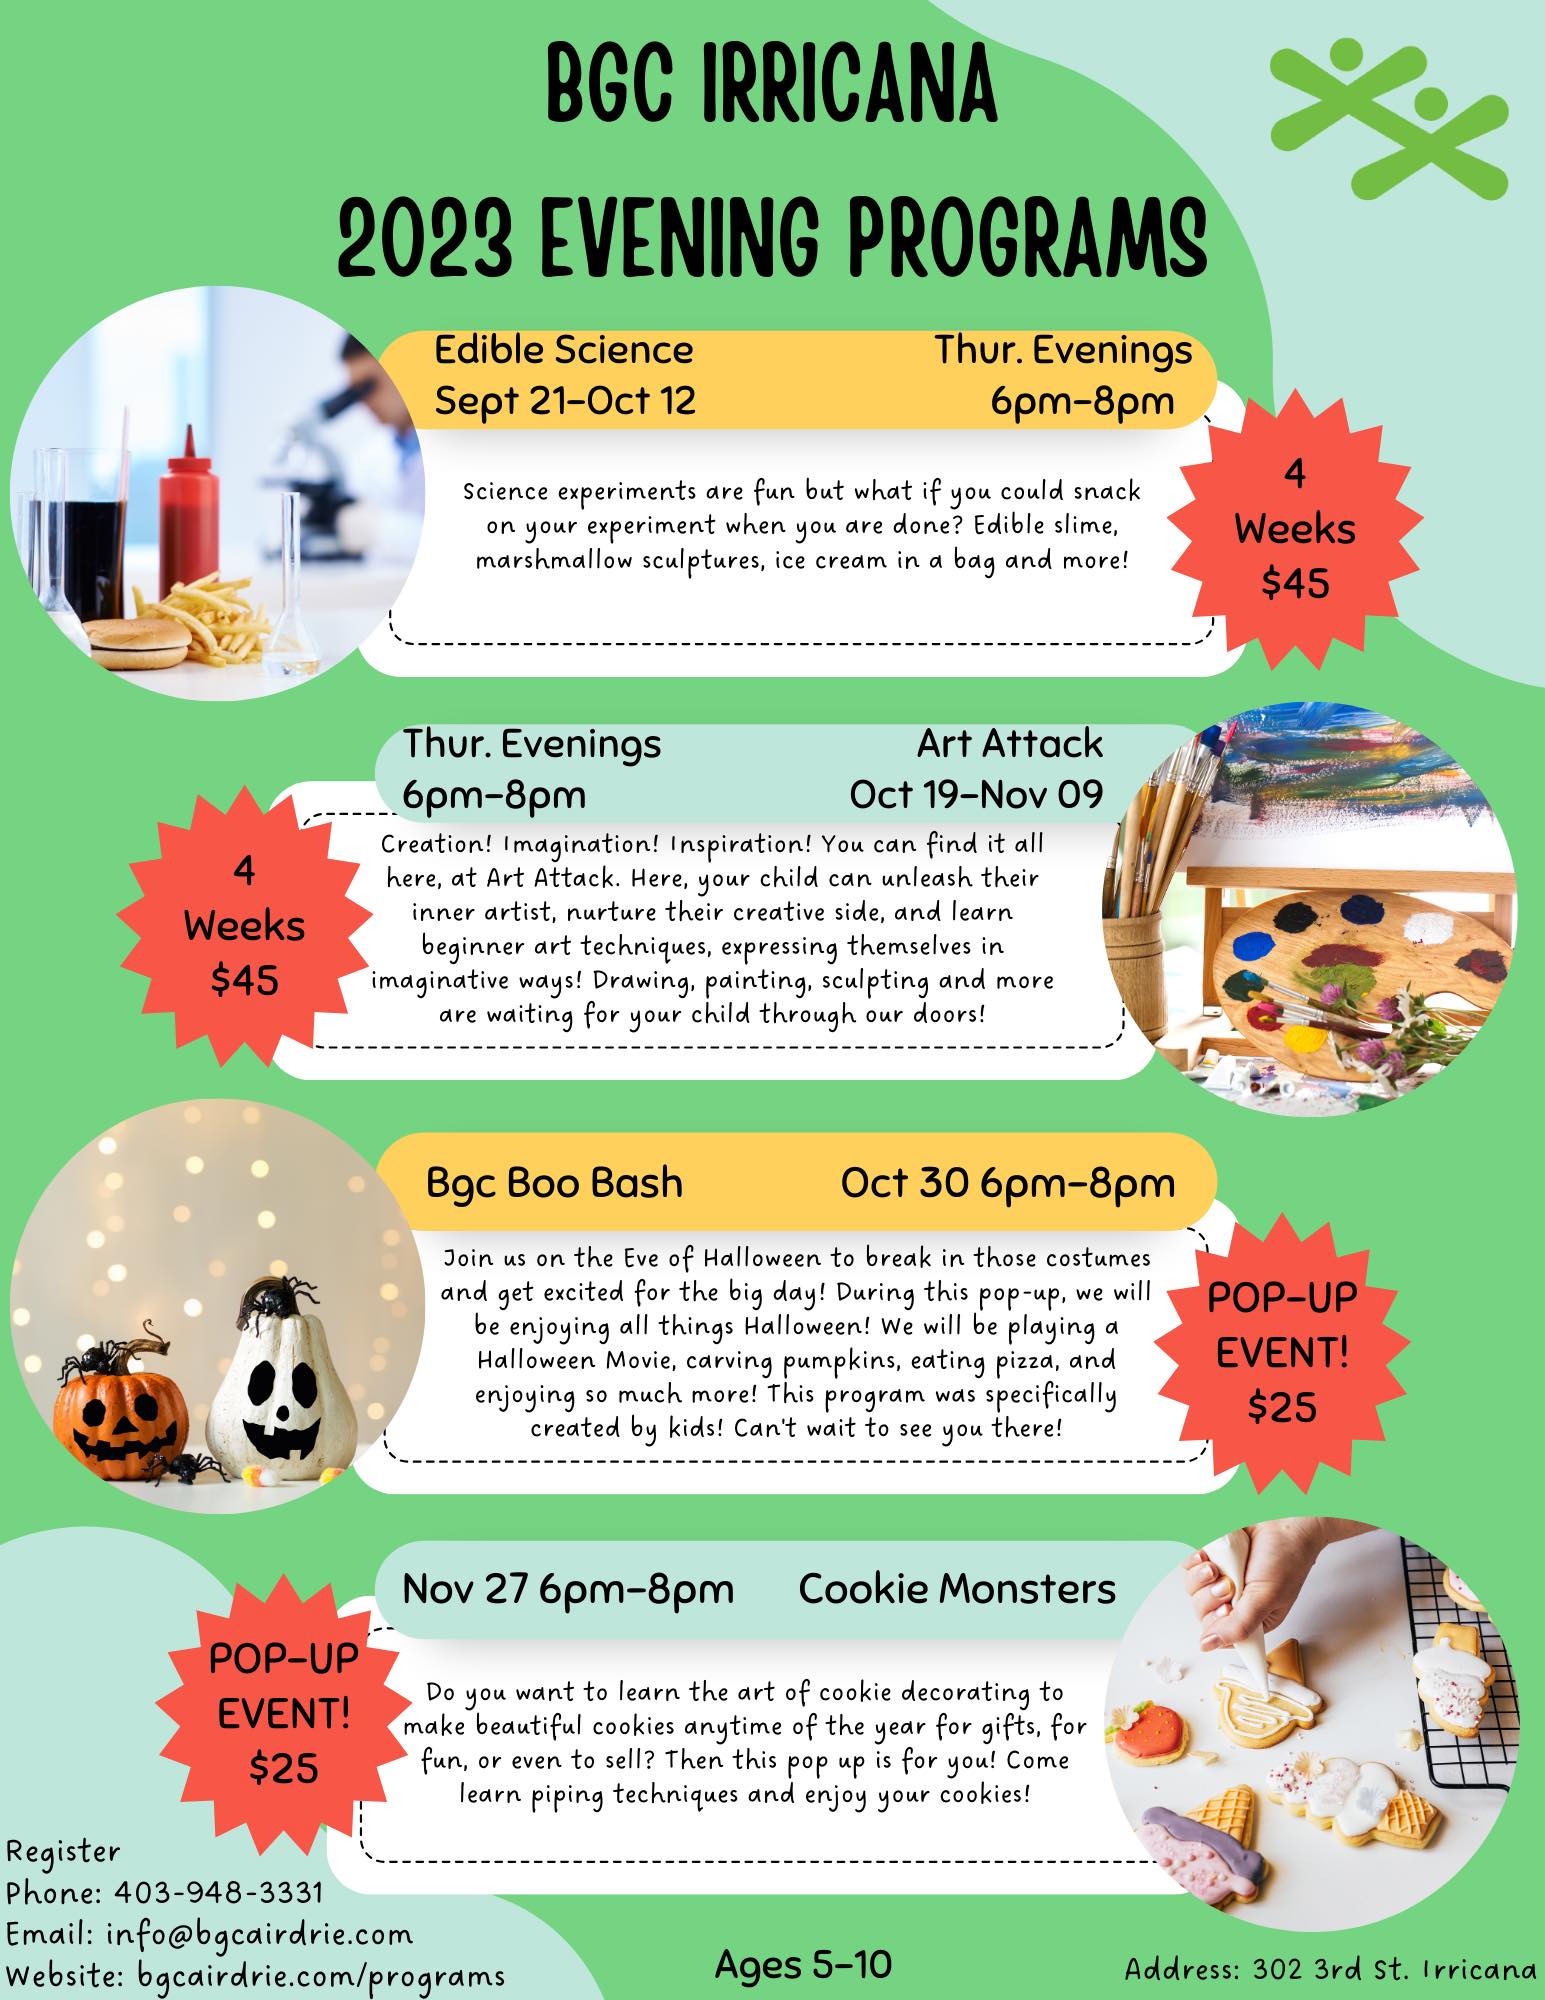 Irricana Boys & Girls Club Evening Programs Fall 2023